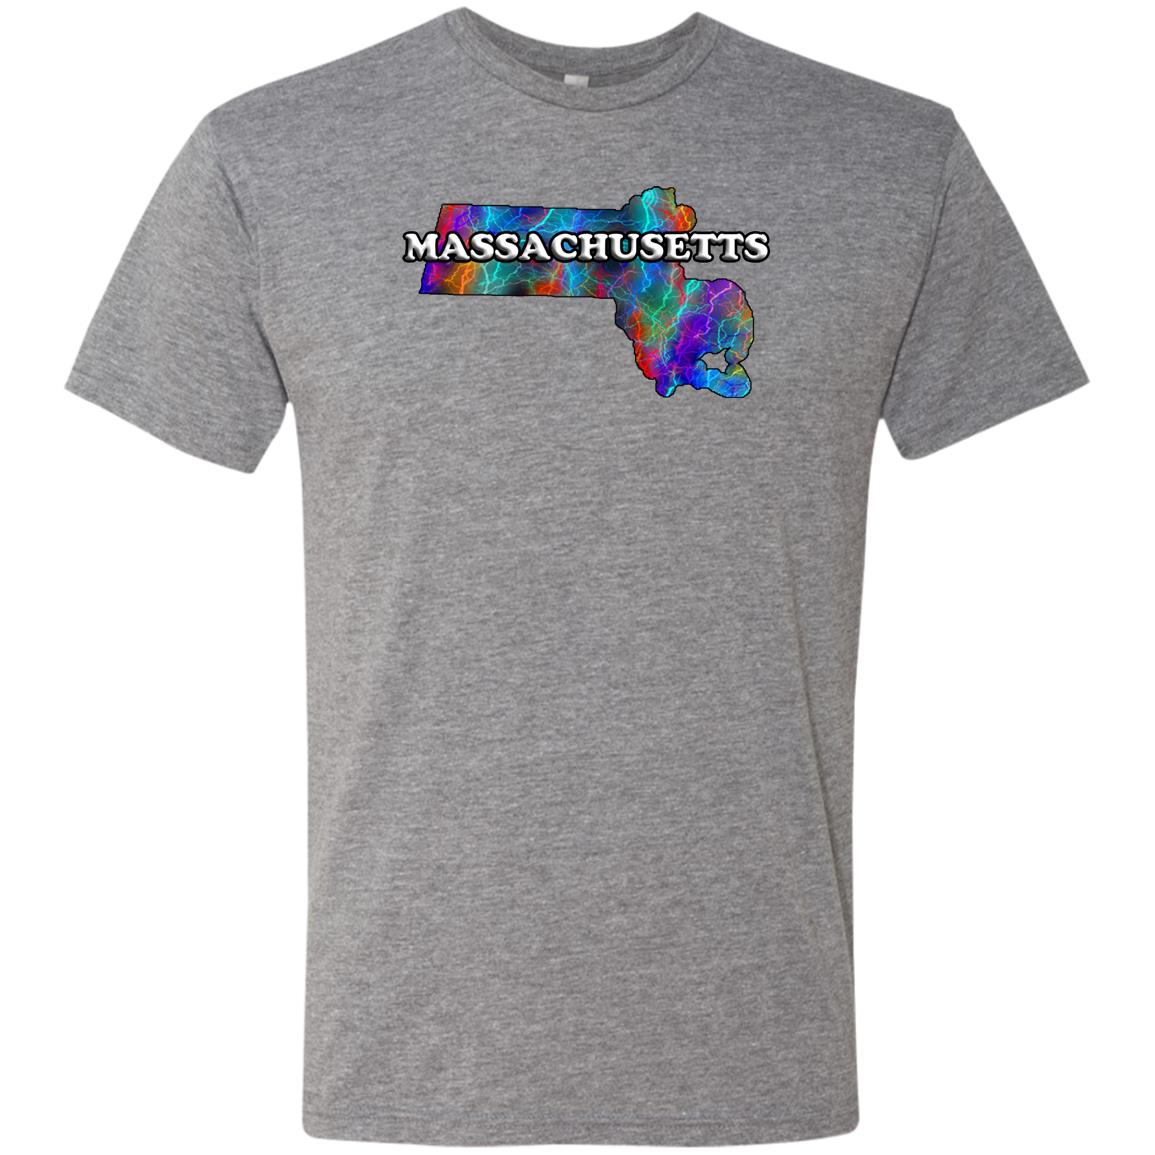 Massachusetts State T-Shirt